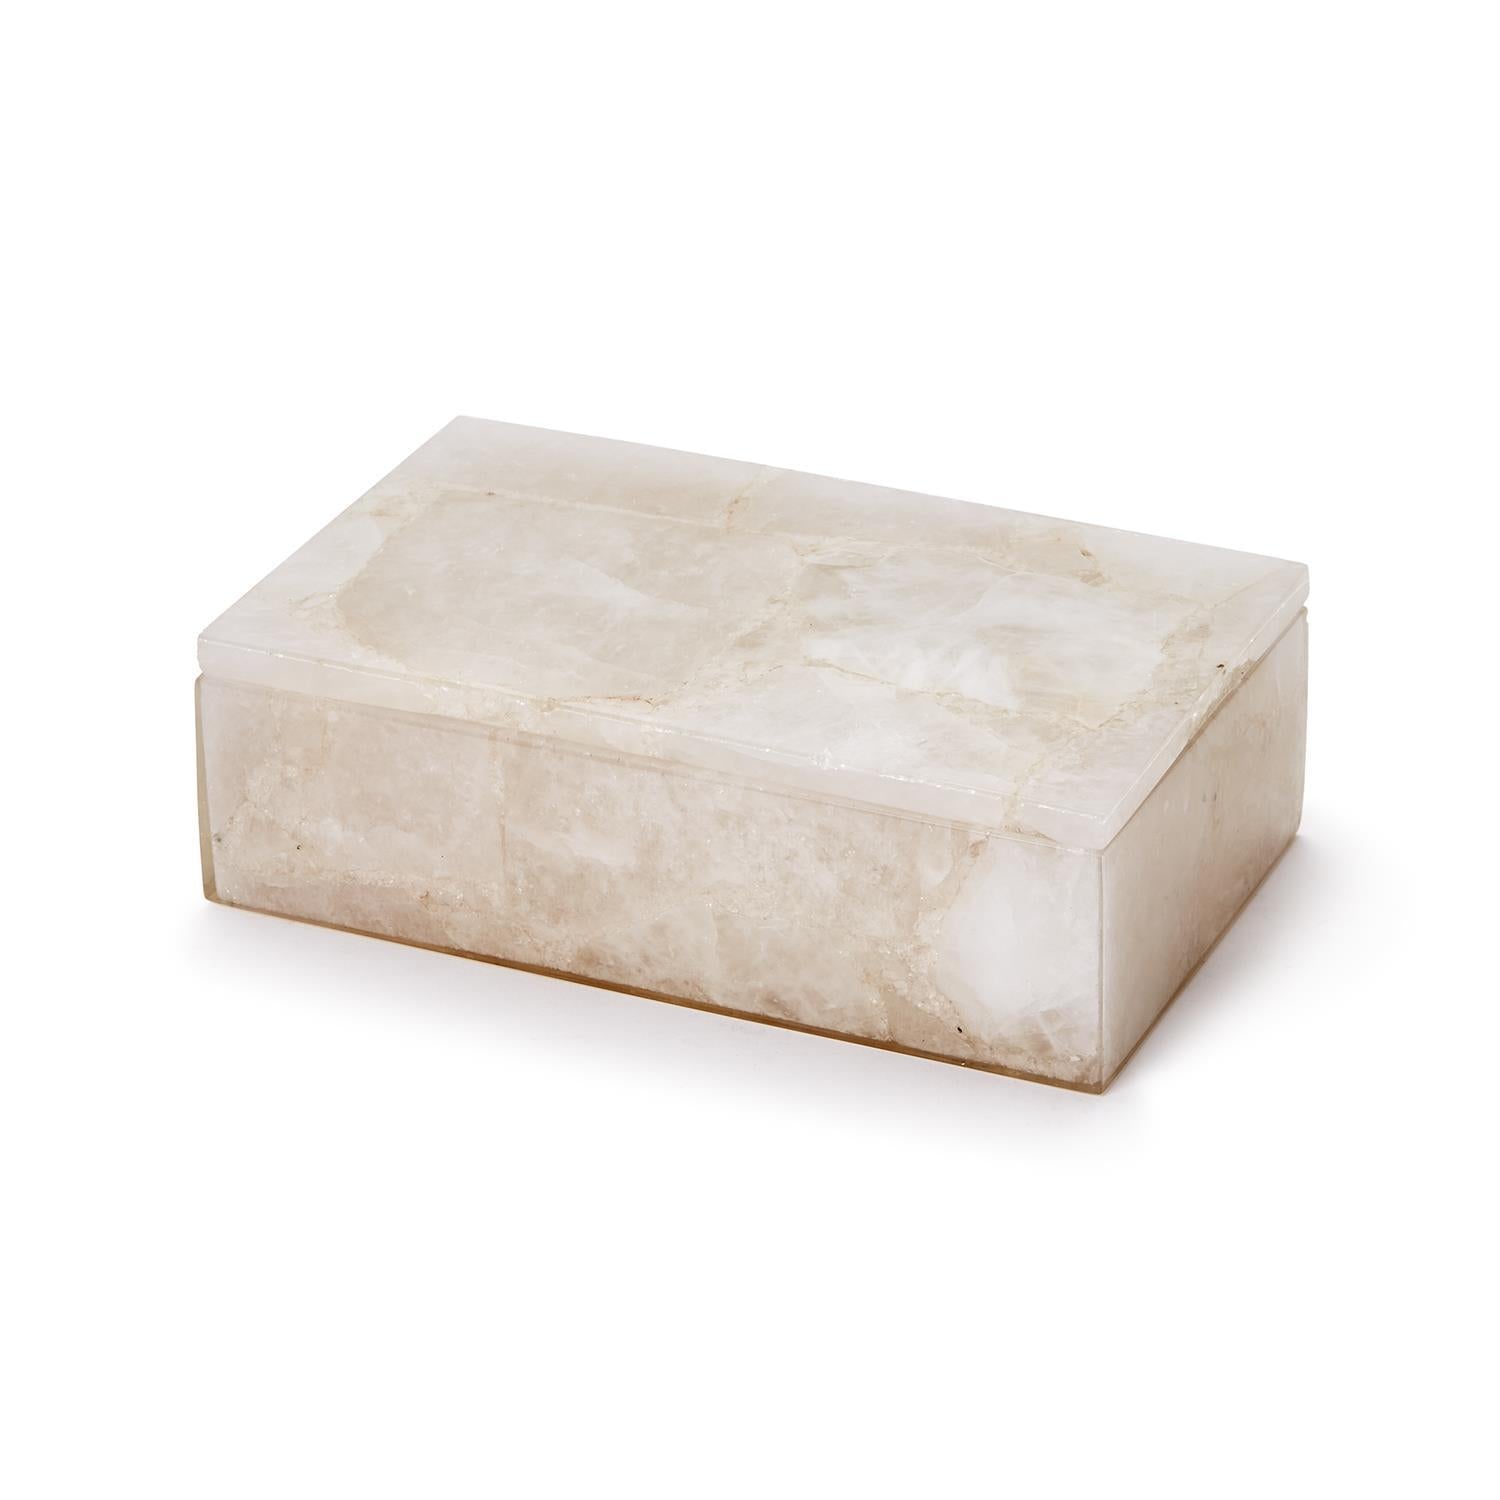 White Quartz Box with Lid